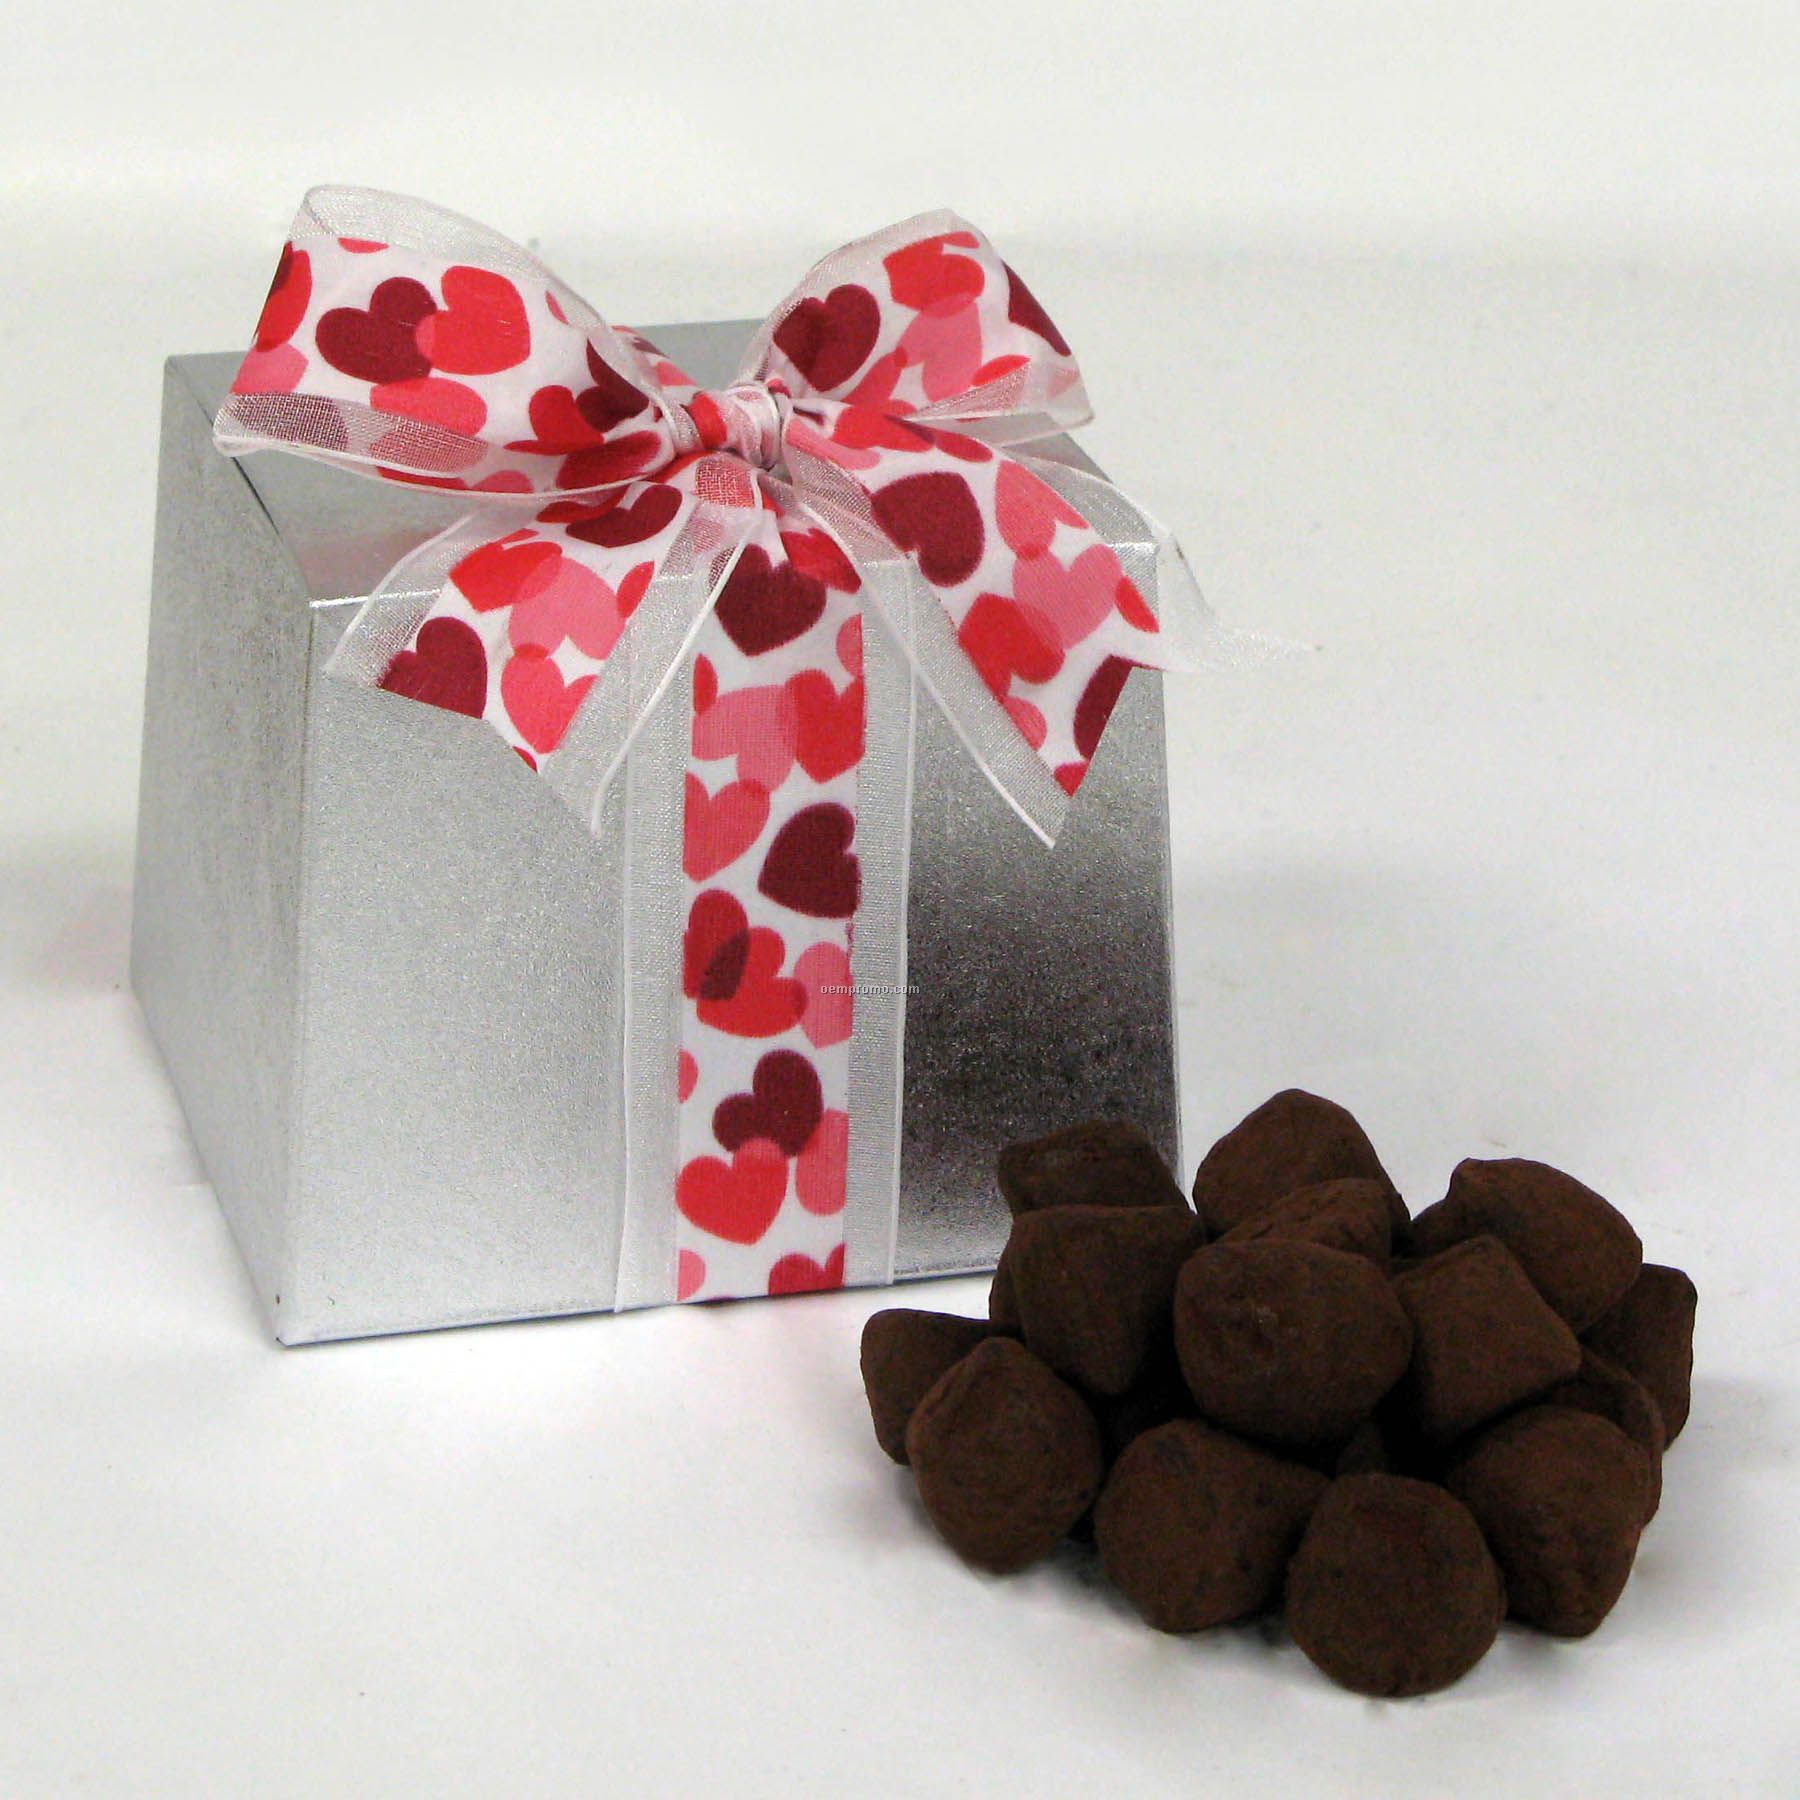 Deluxe 8 Oz. Valentine Truffle Gift Box